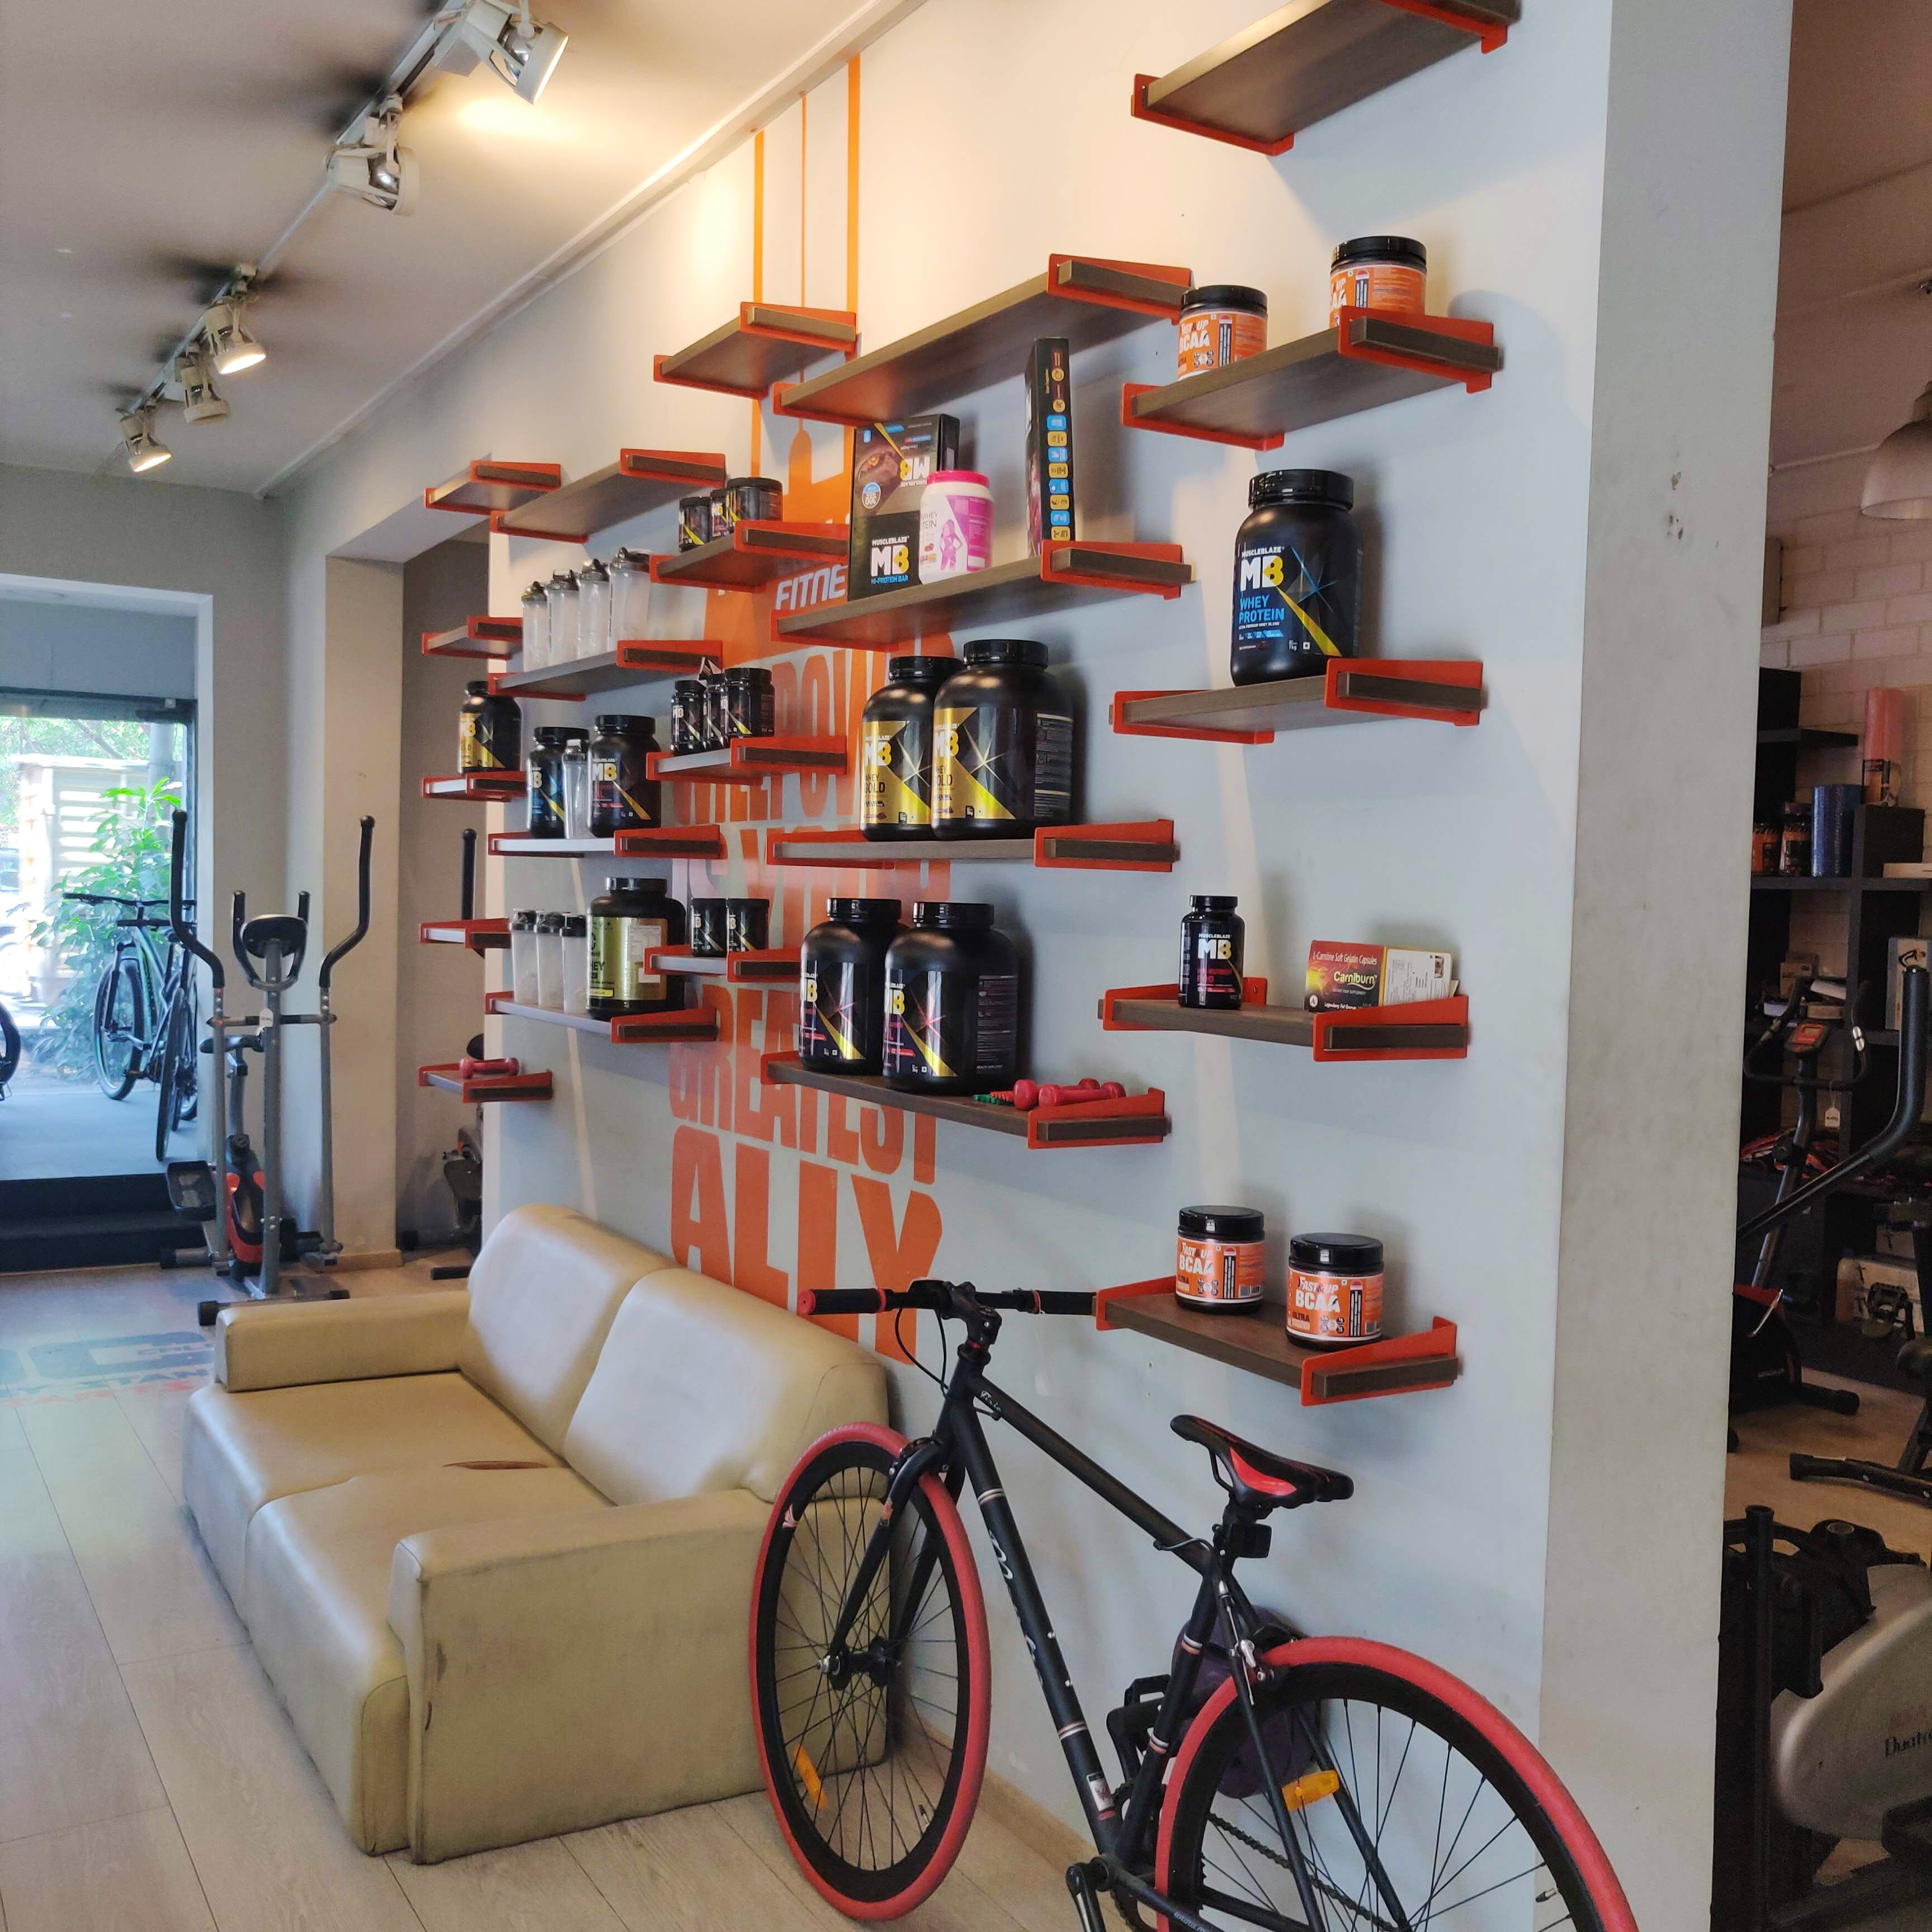 Shelf,Shelving,Bicycle wheel,Bicycle,Room,Building,Bicycle fork,Vehicle,Bicycle part,Interior design